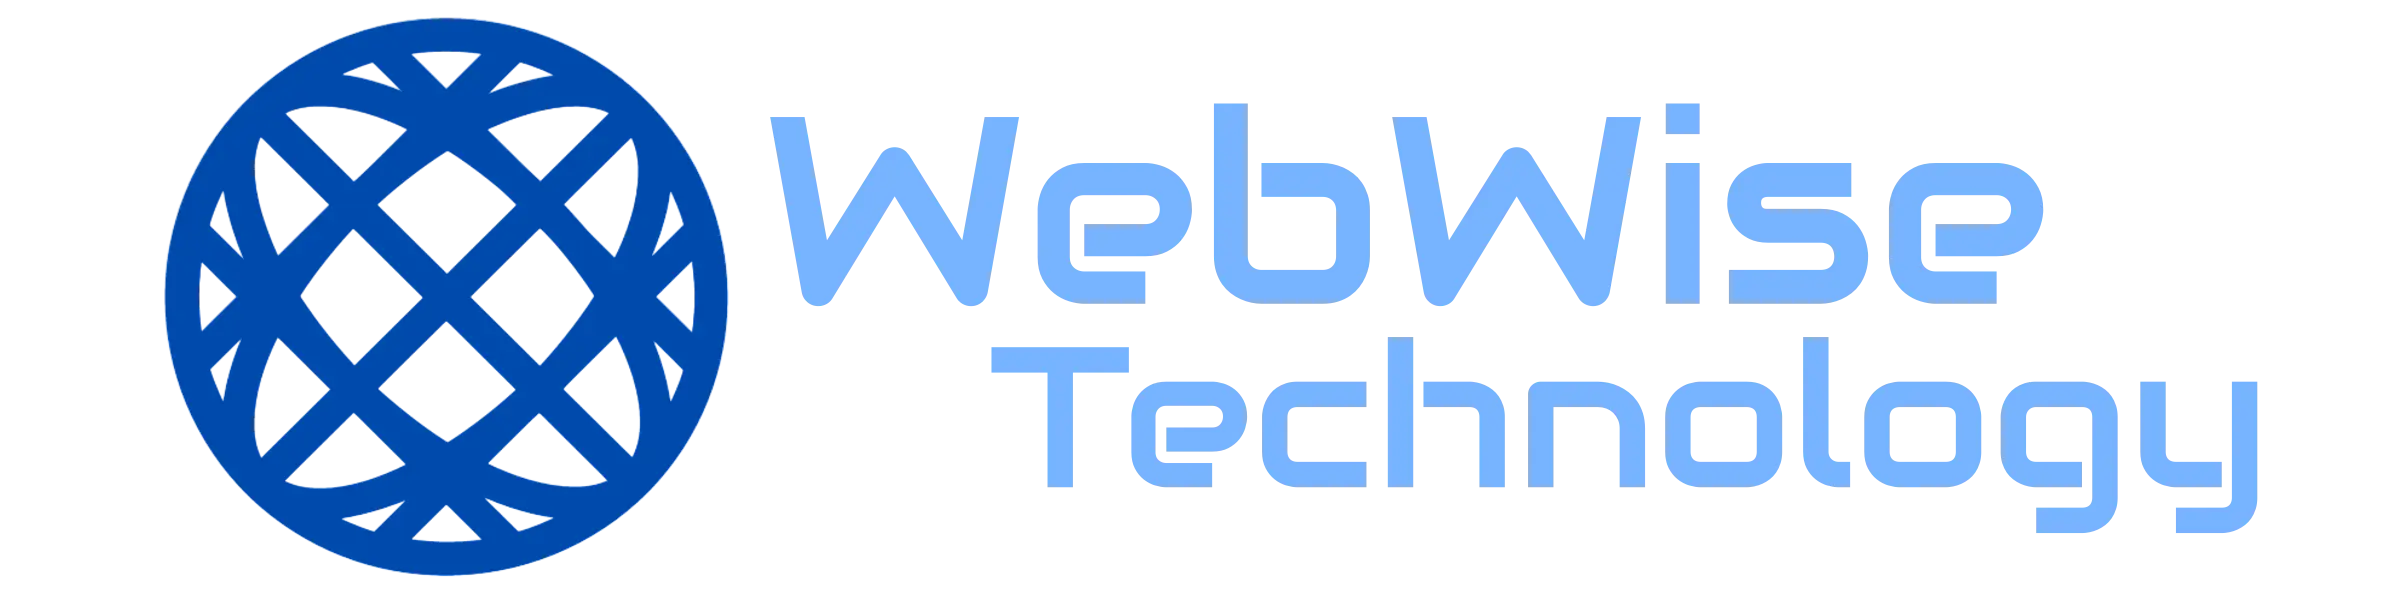 WebWise Technology